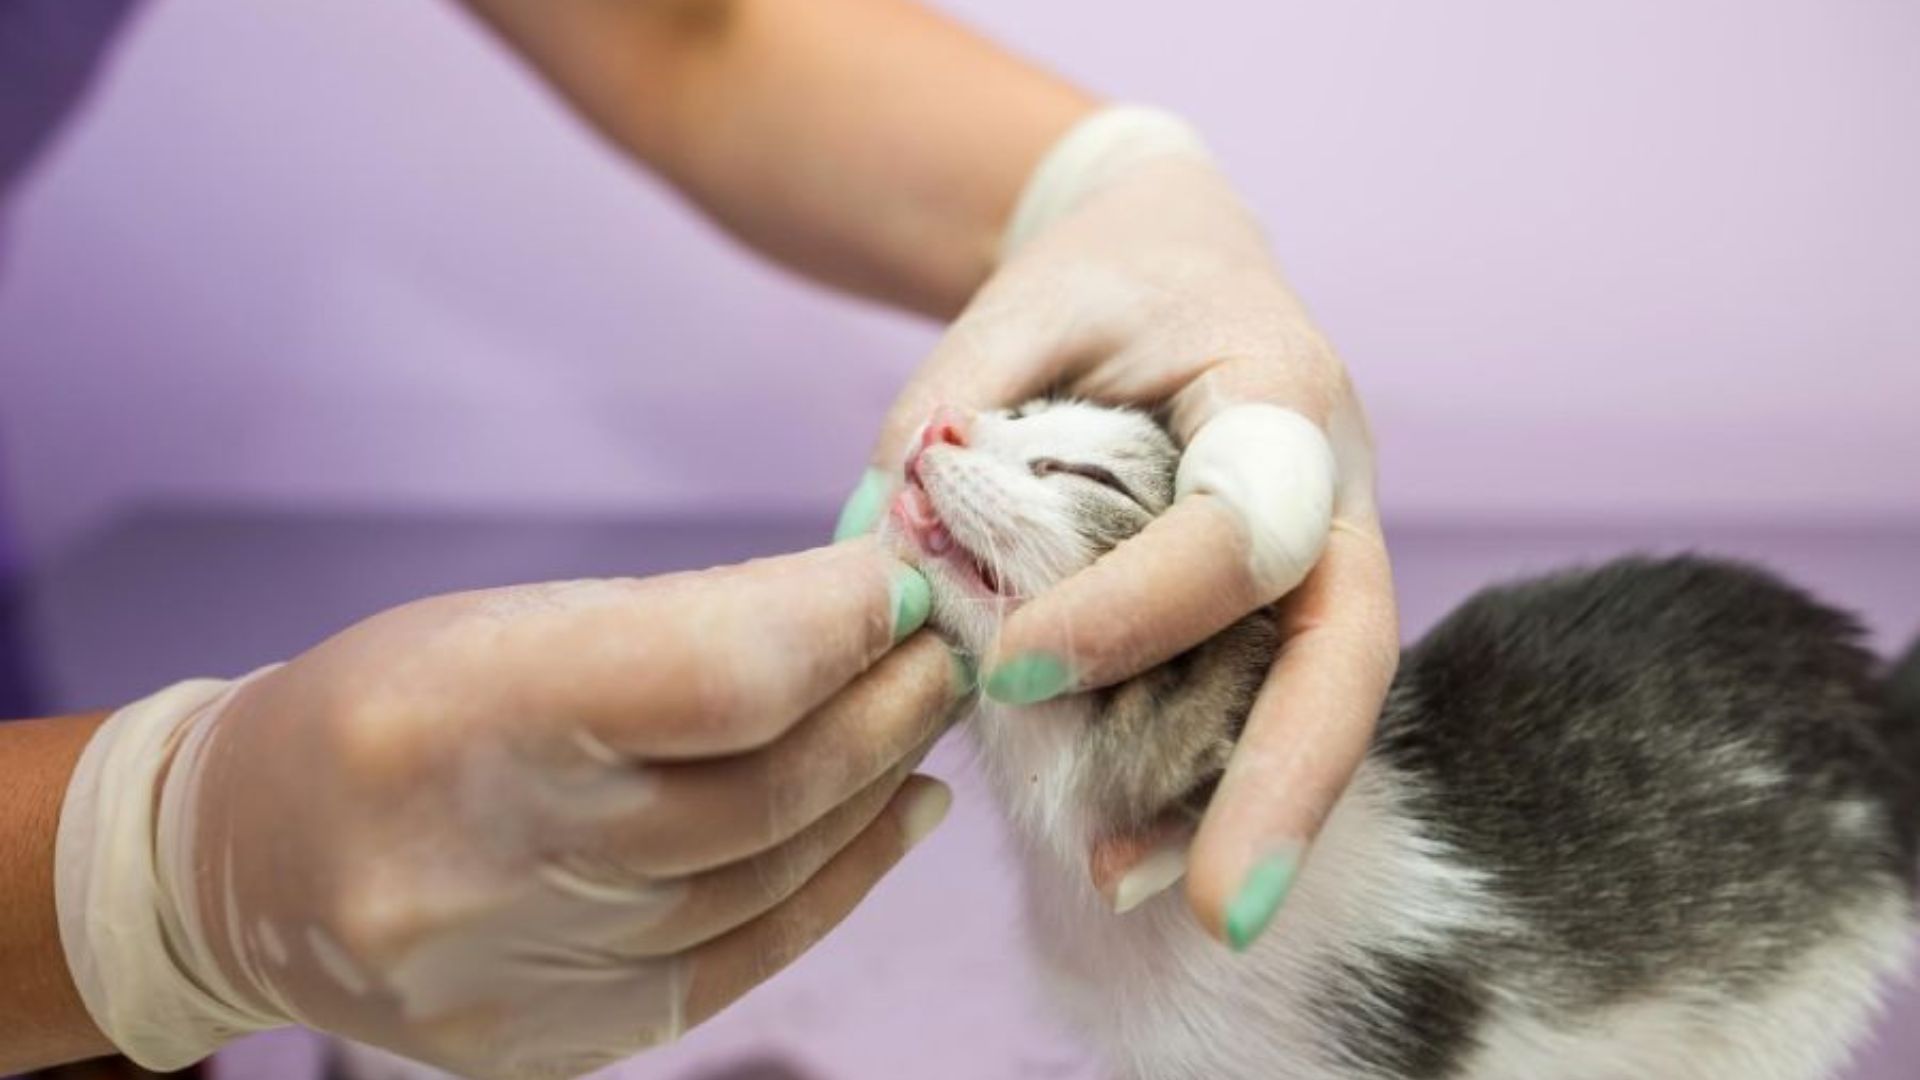 veterinarian examining teeth of a cat